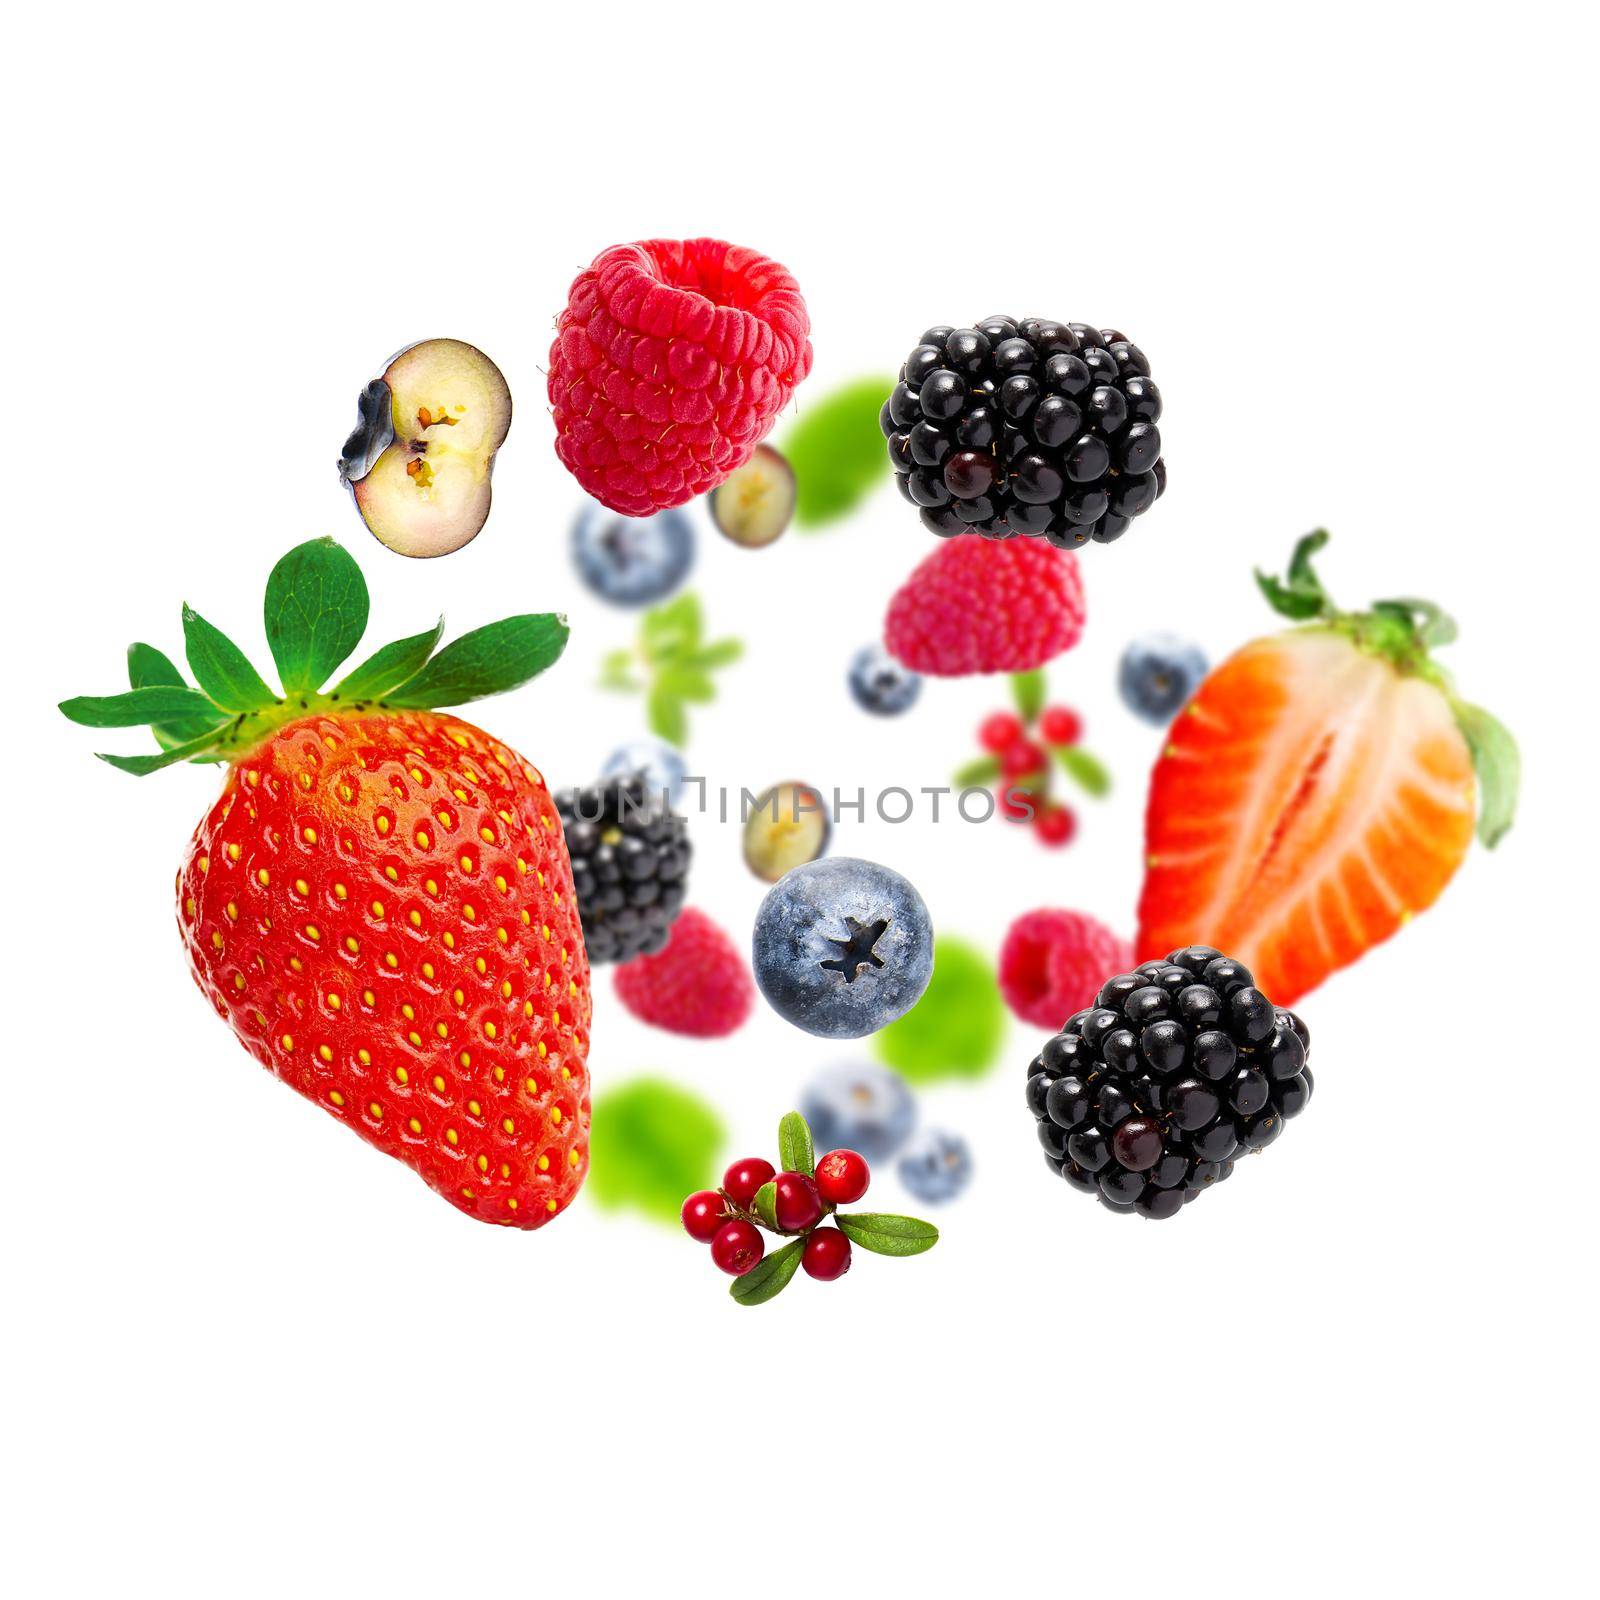 Summer Berries on white background. Strawberry, blueberry, raspberry, blackberry. summer background. ripe juicy berries